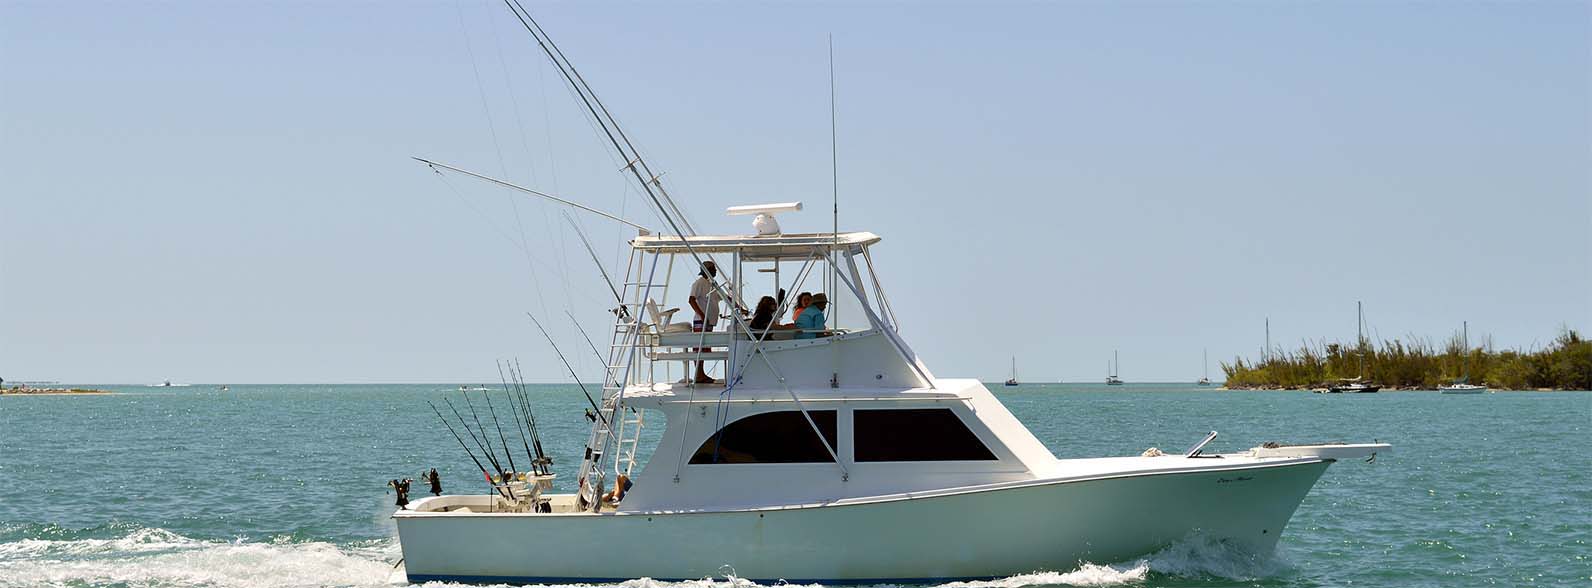 South Florida Fishing Destinations & Tours